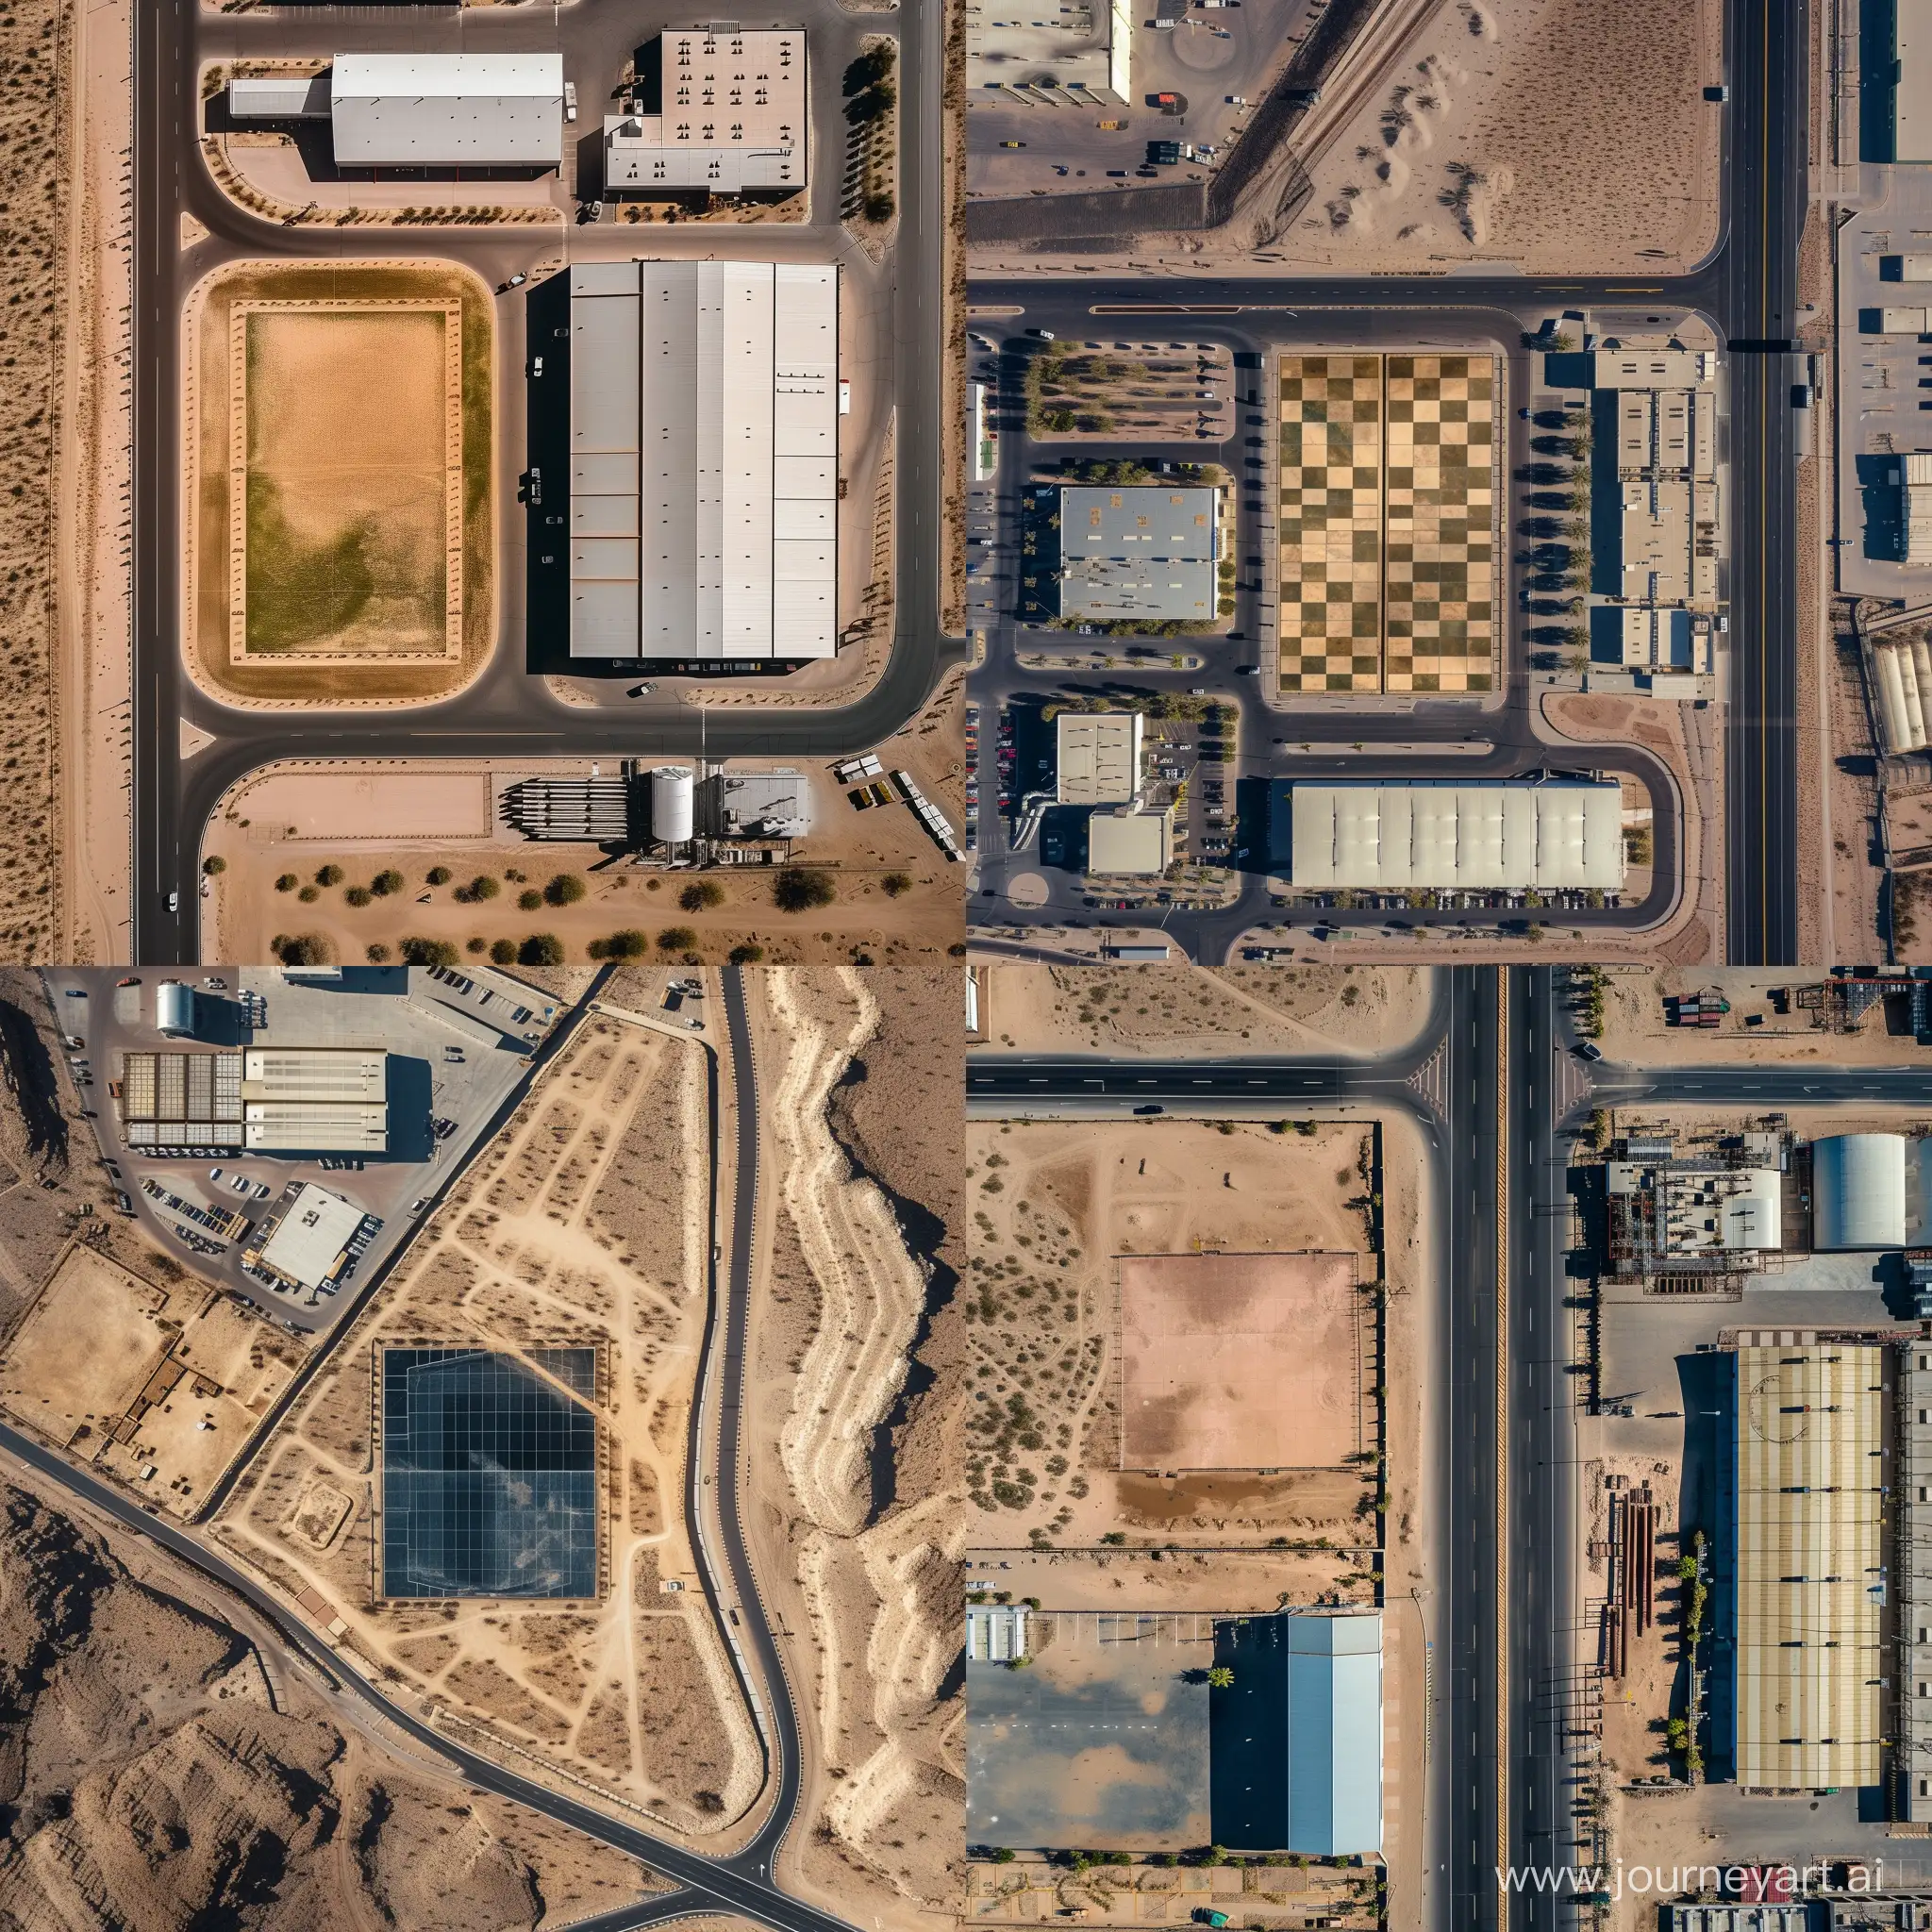 Strategic-Board-Game-in-Desert-Landscape-Overhead-Industrial-Challenge